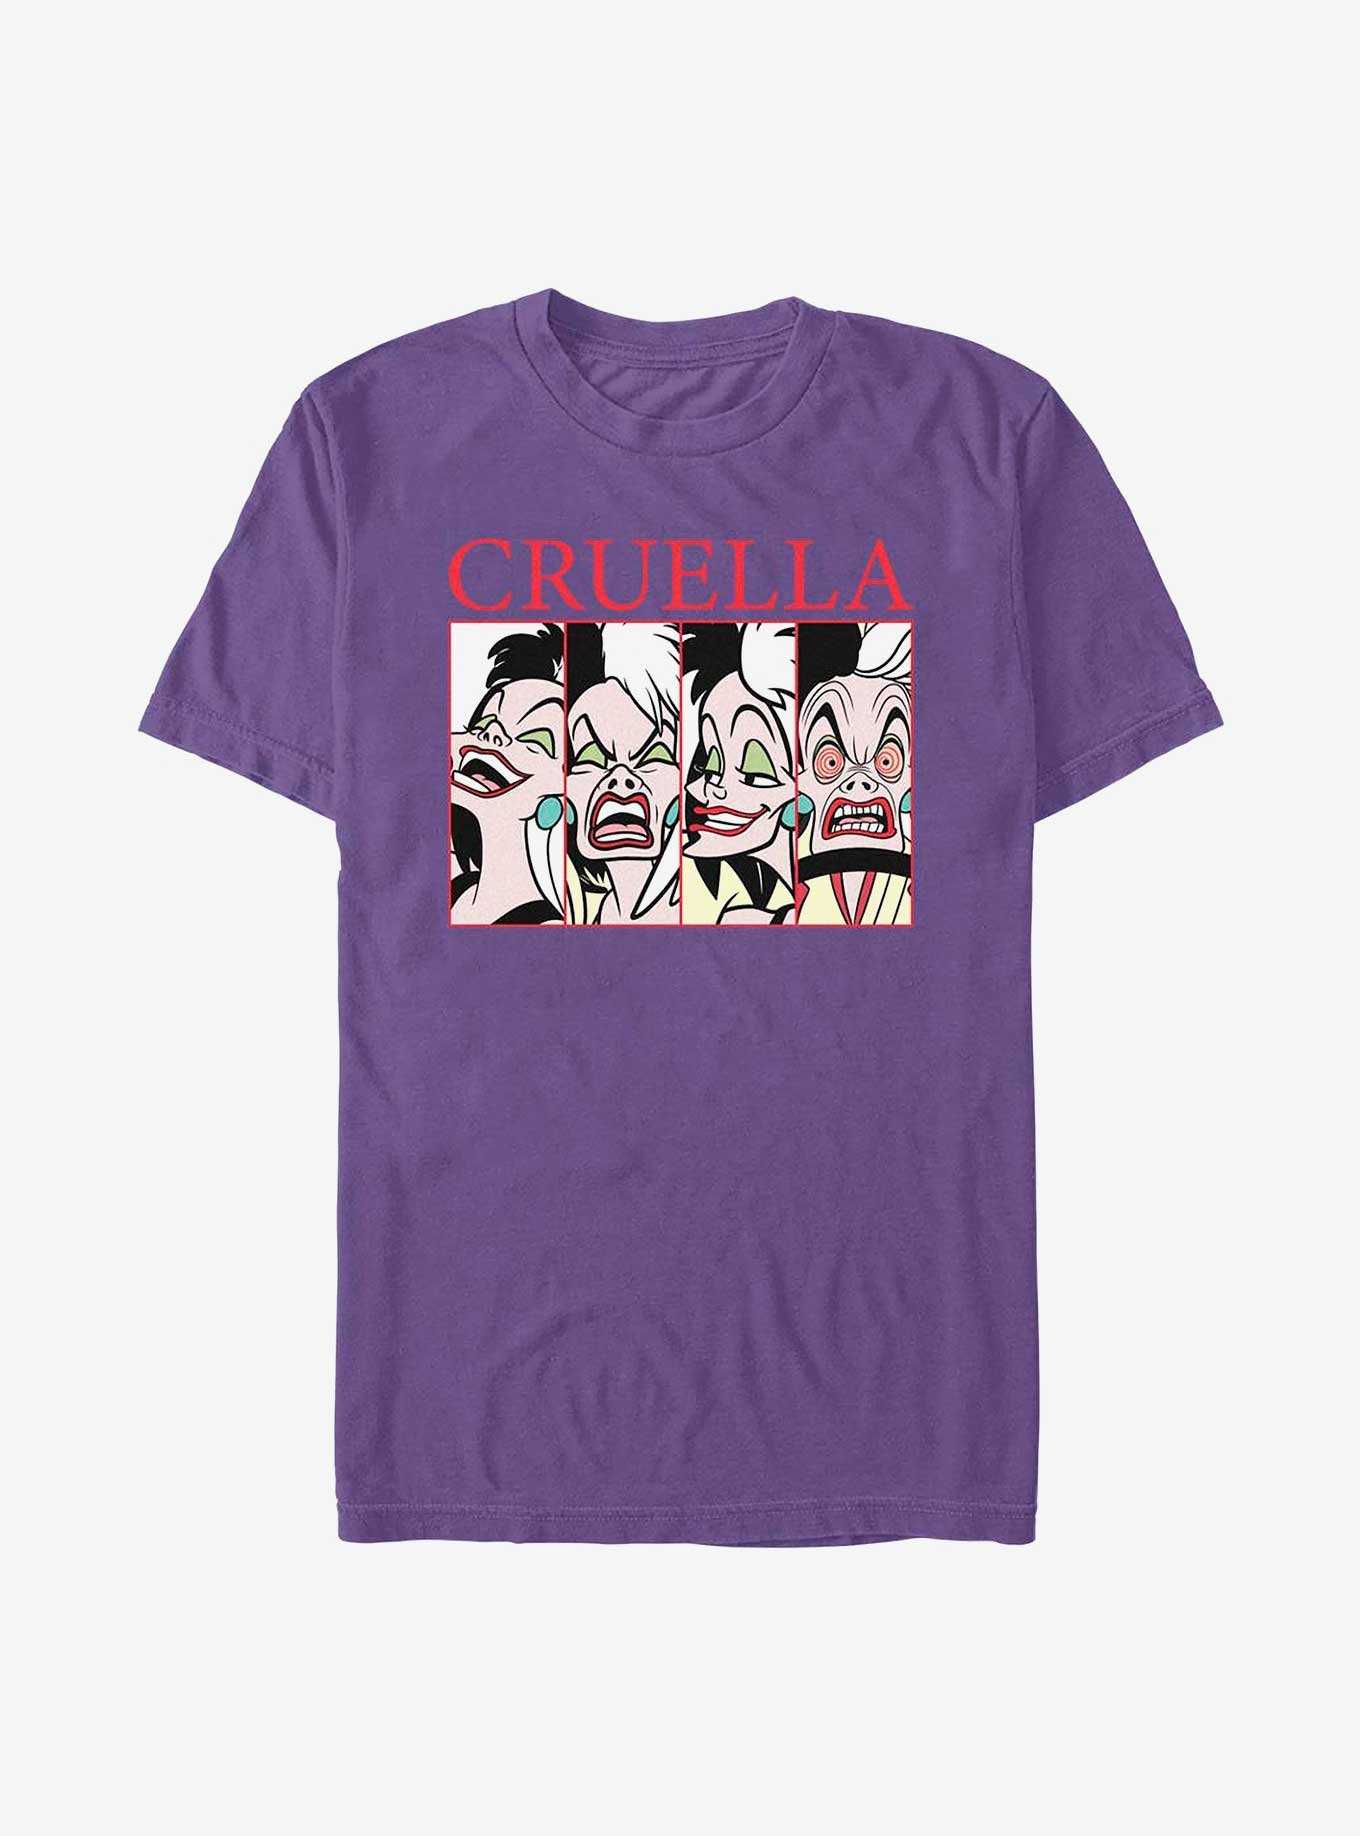 Cruella Devil Shirt 101 Dalmatians Shirt Gym Shirt Working -  Norway